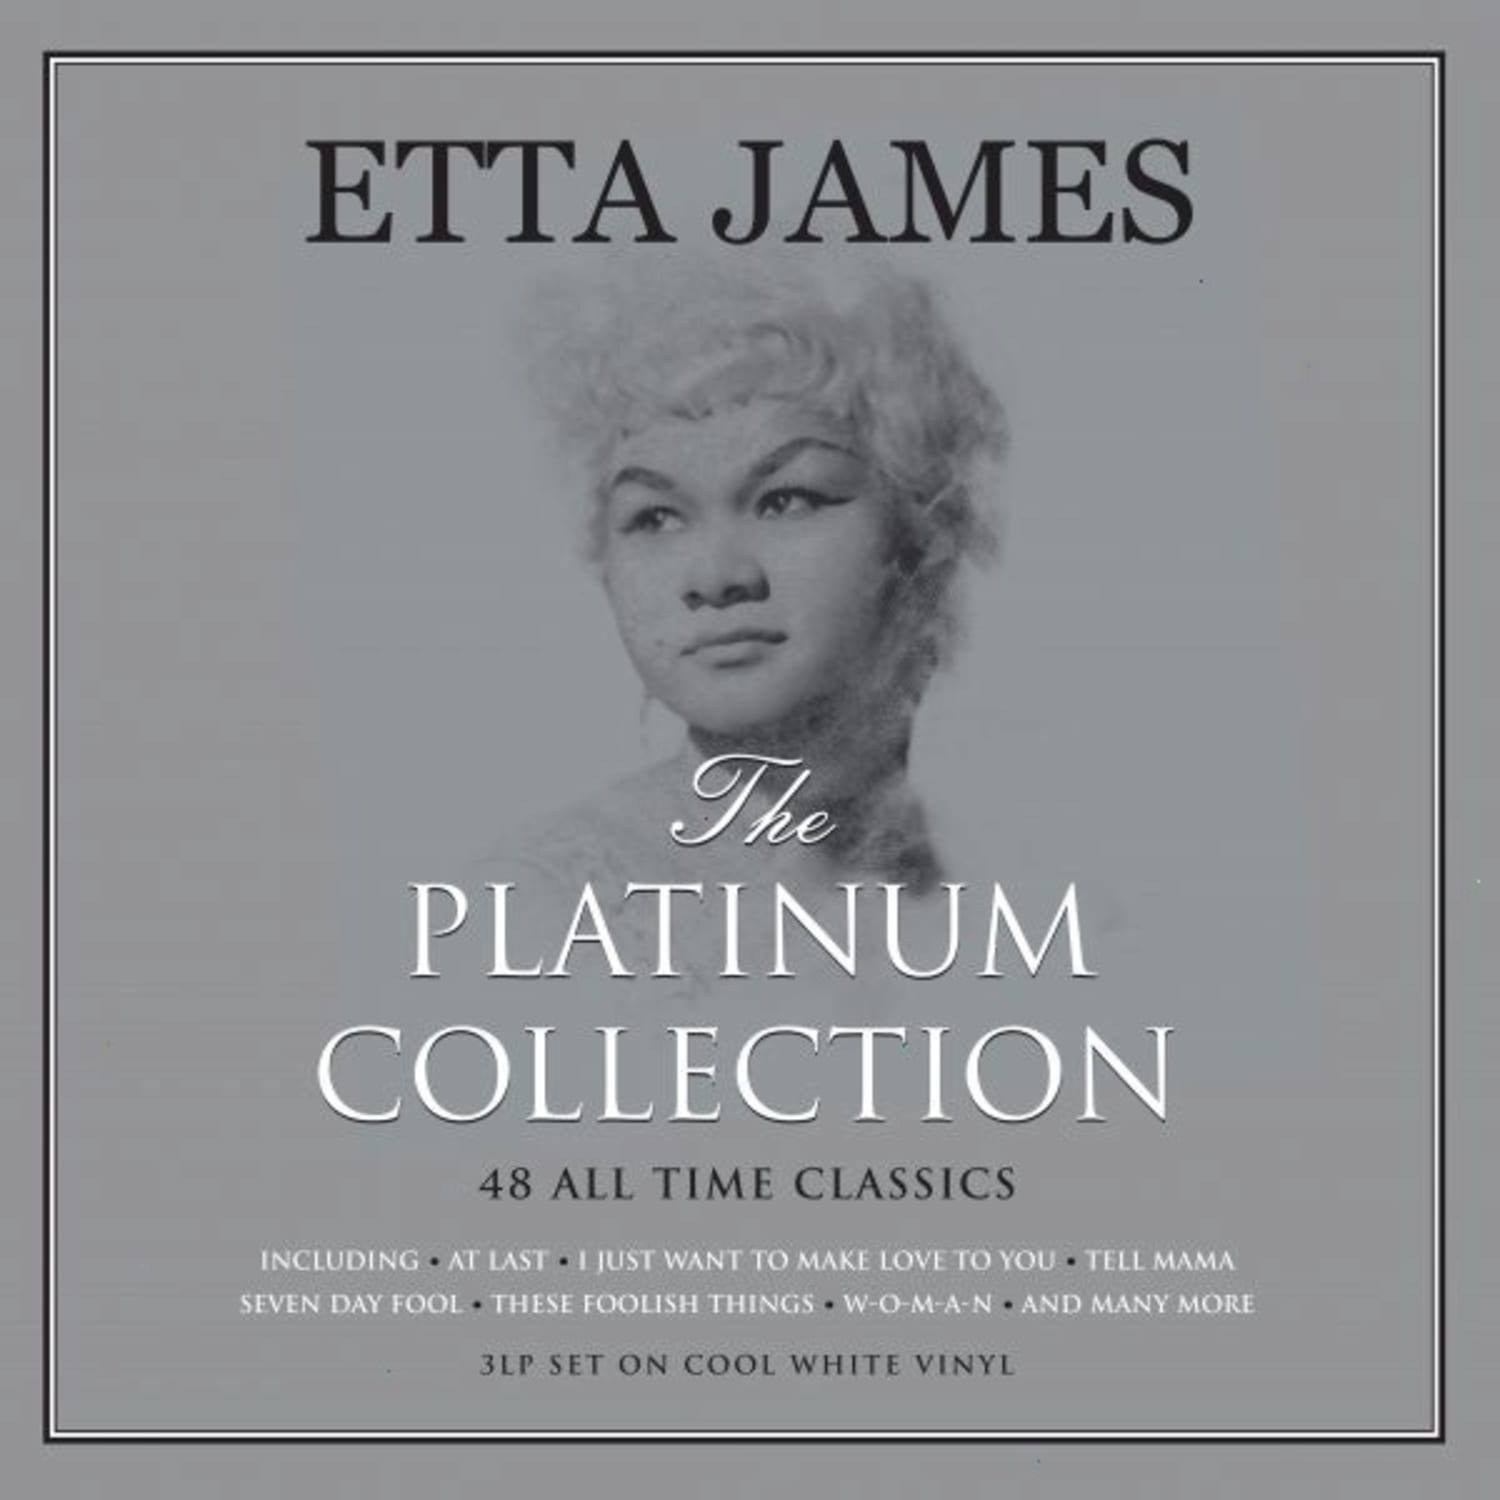 ETTA JAMES – The Platinum Collection [Gatefold, 3LP White Vinyl Set] on MovieShack